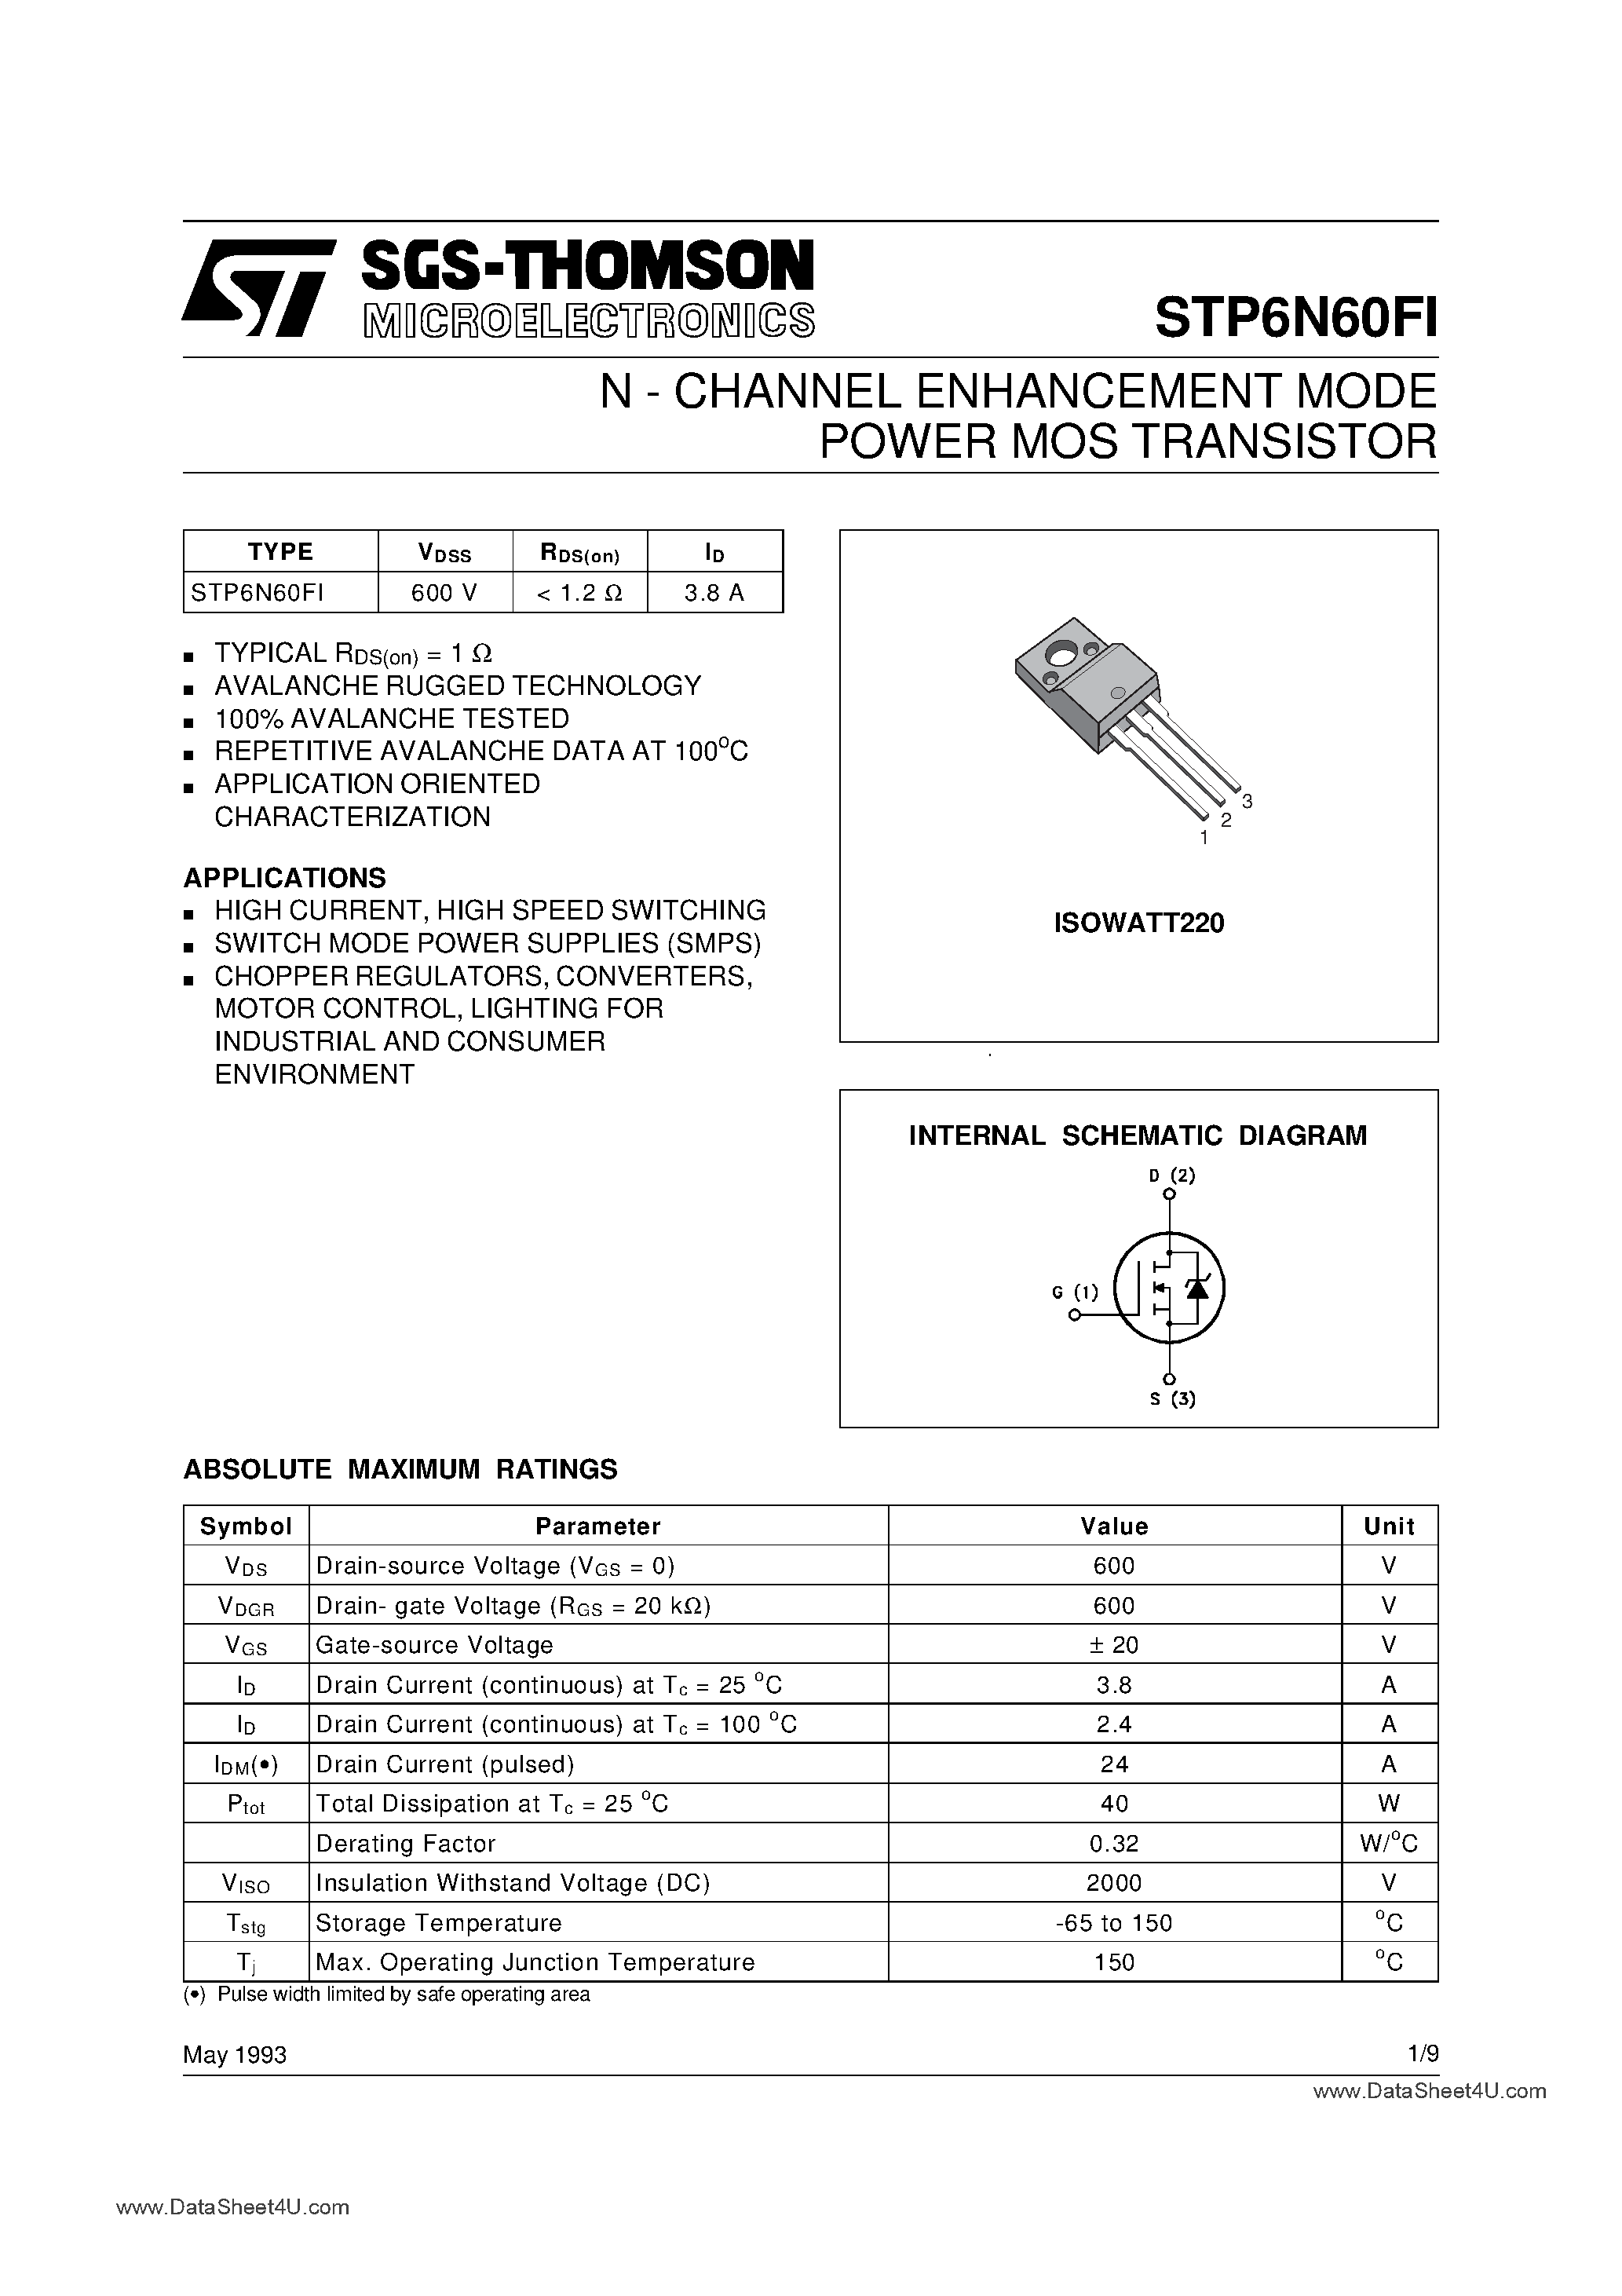 Datasheet STP6N60FI - N - CHANNEL ENHANCEMENT MODE POWER MOS TRANSISTOR page 1